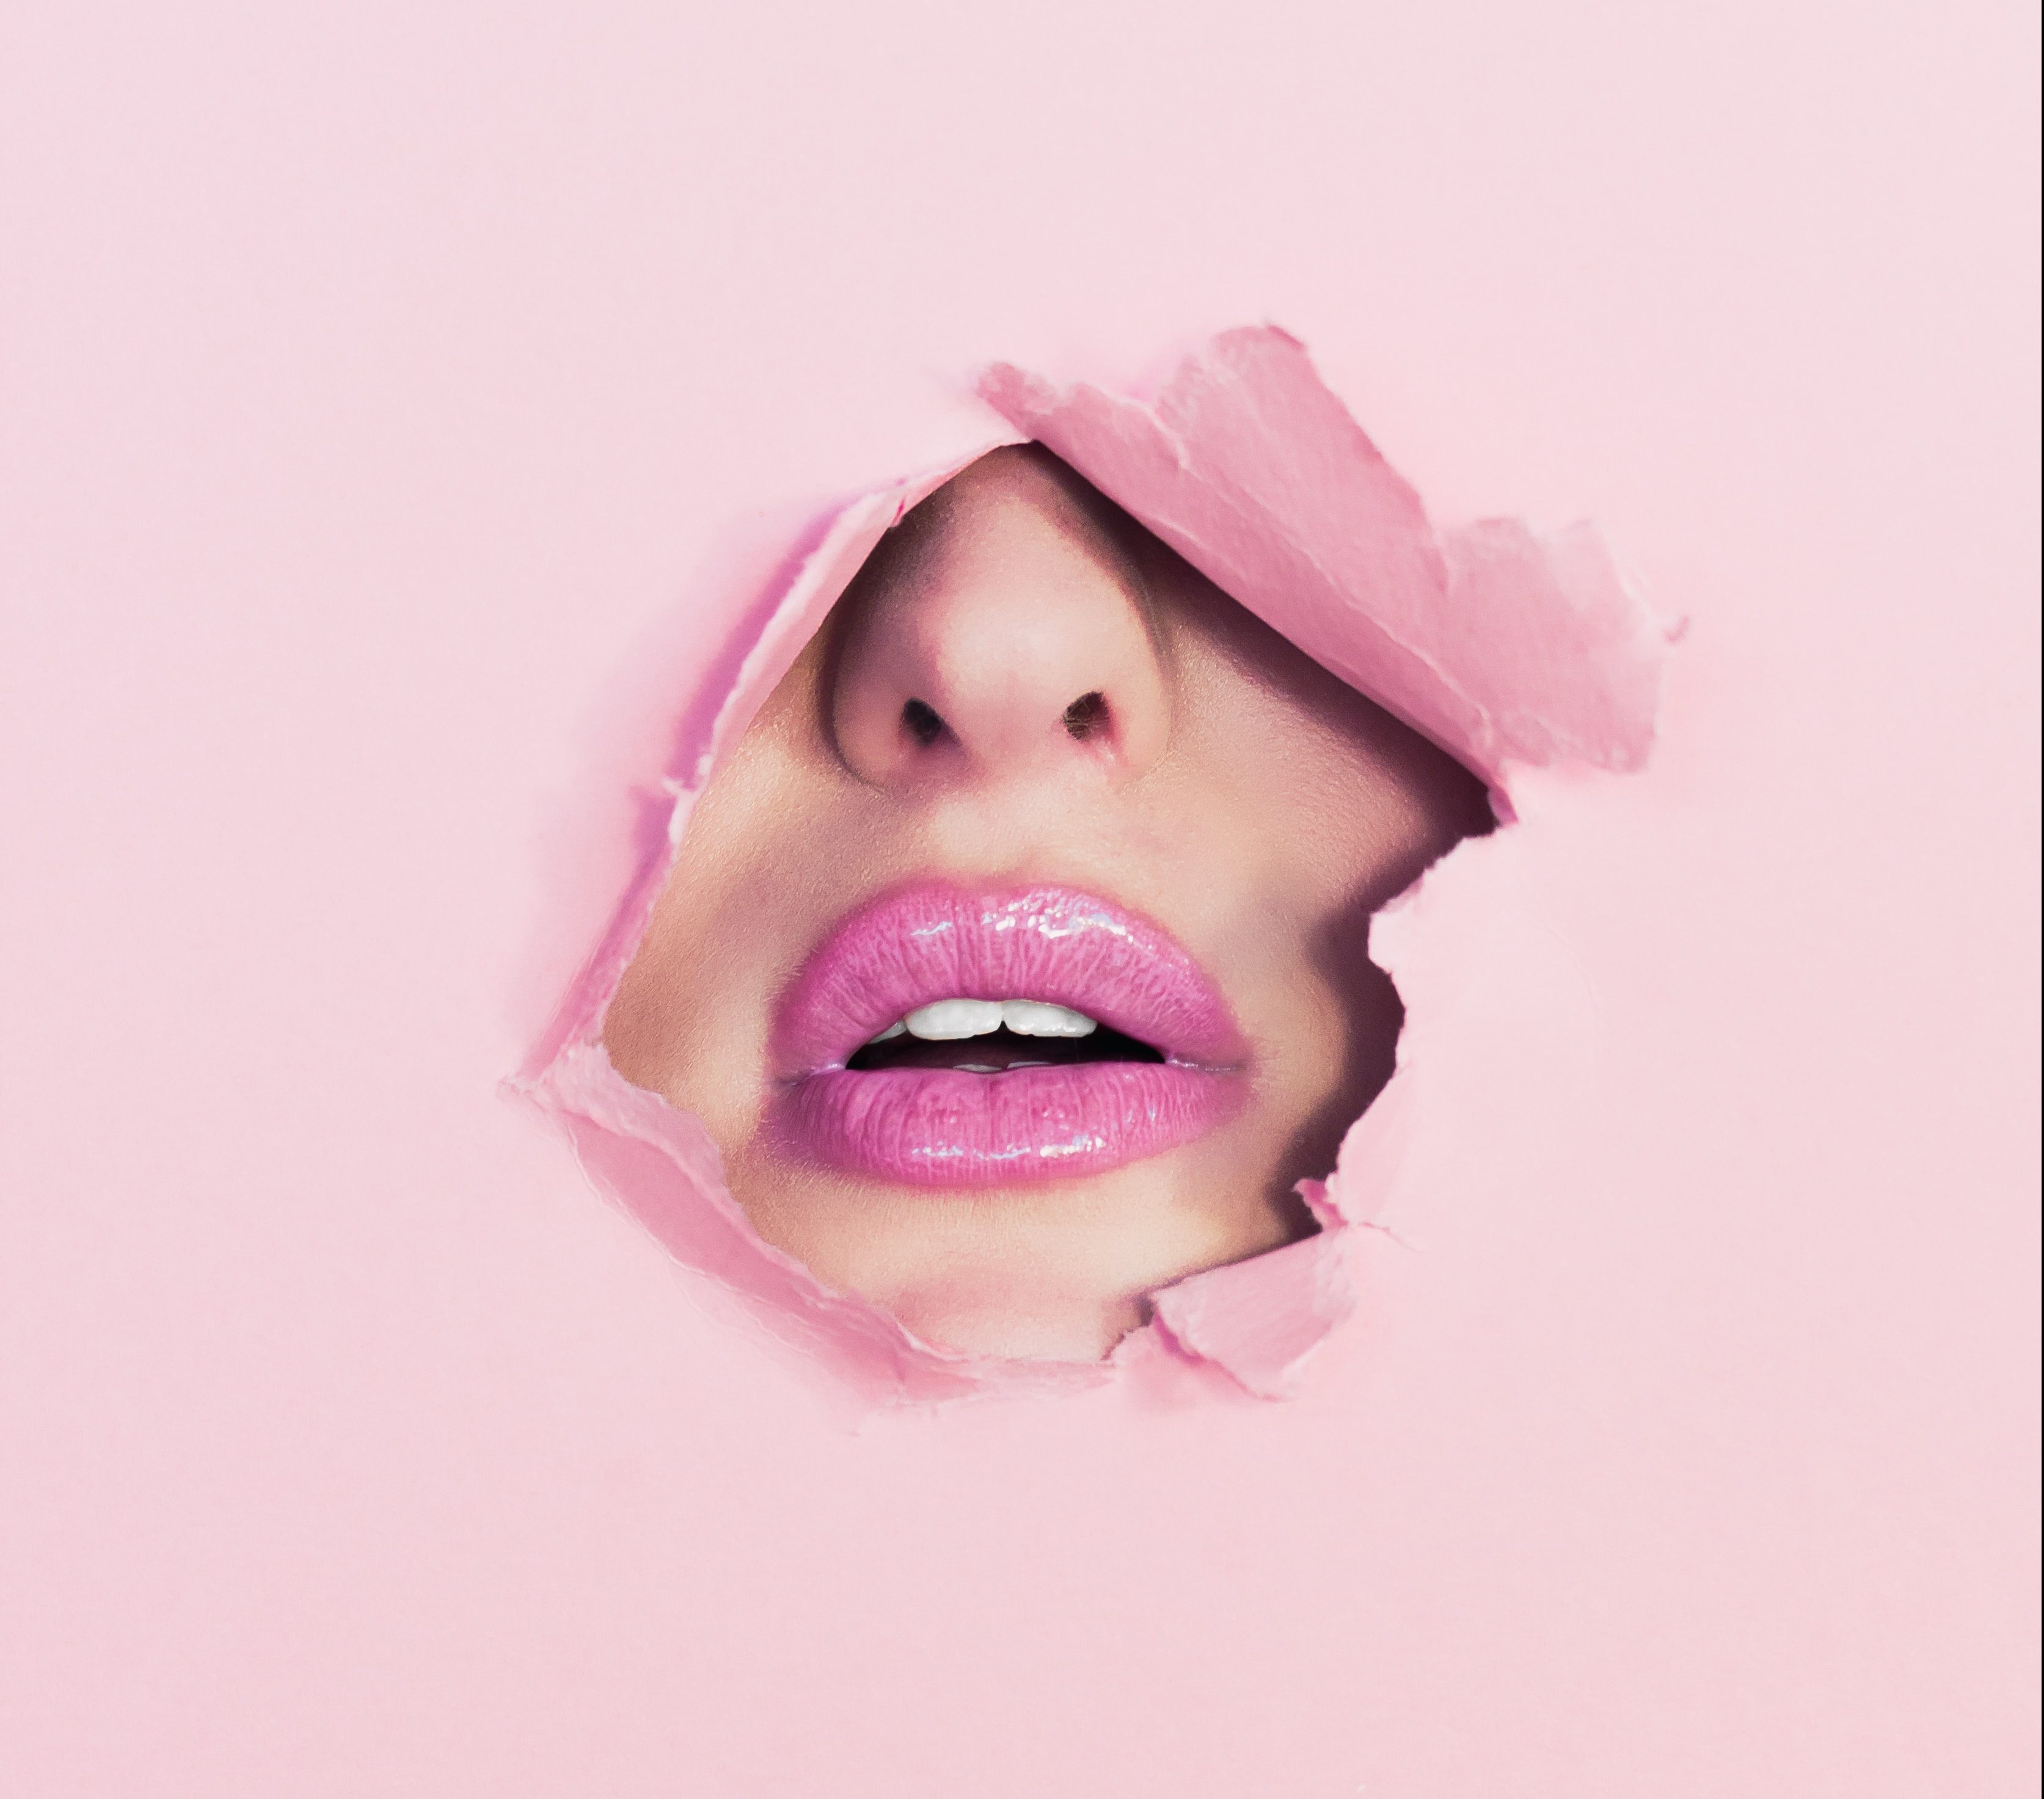 Lips Through a Pink Mask